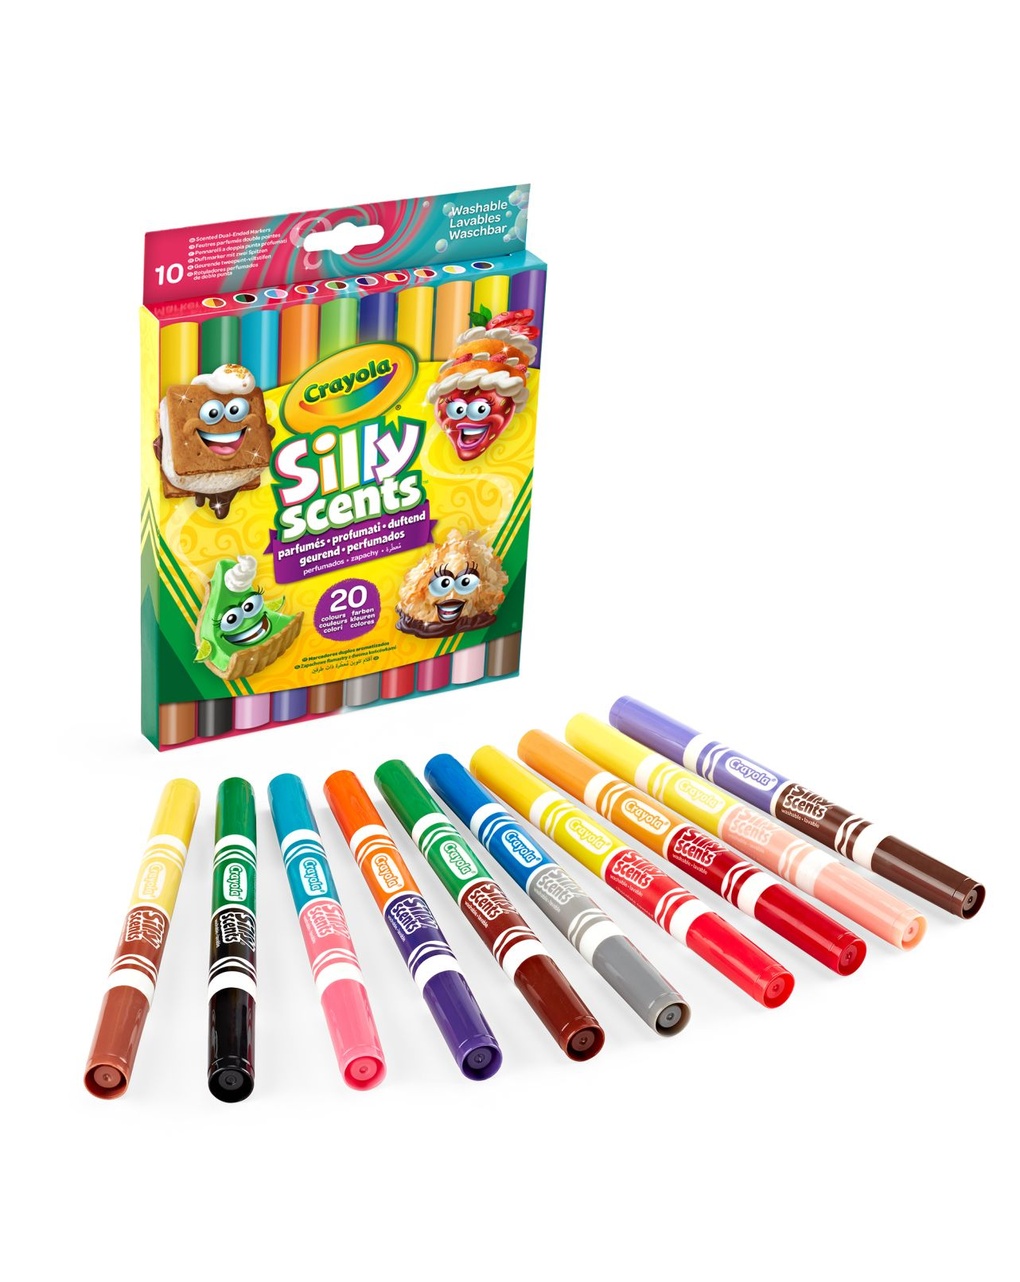 Silly scents - 10 pennarelli lavabili doppia punta profumati - 3+ - crayola - Crayola